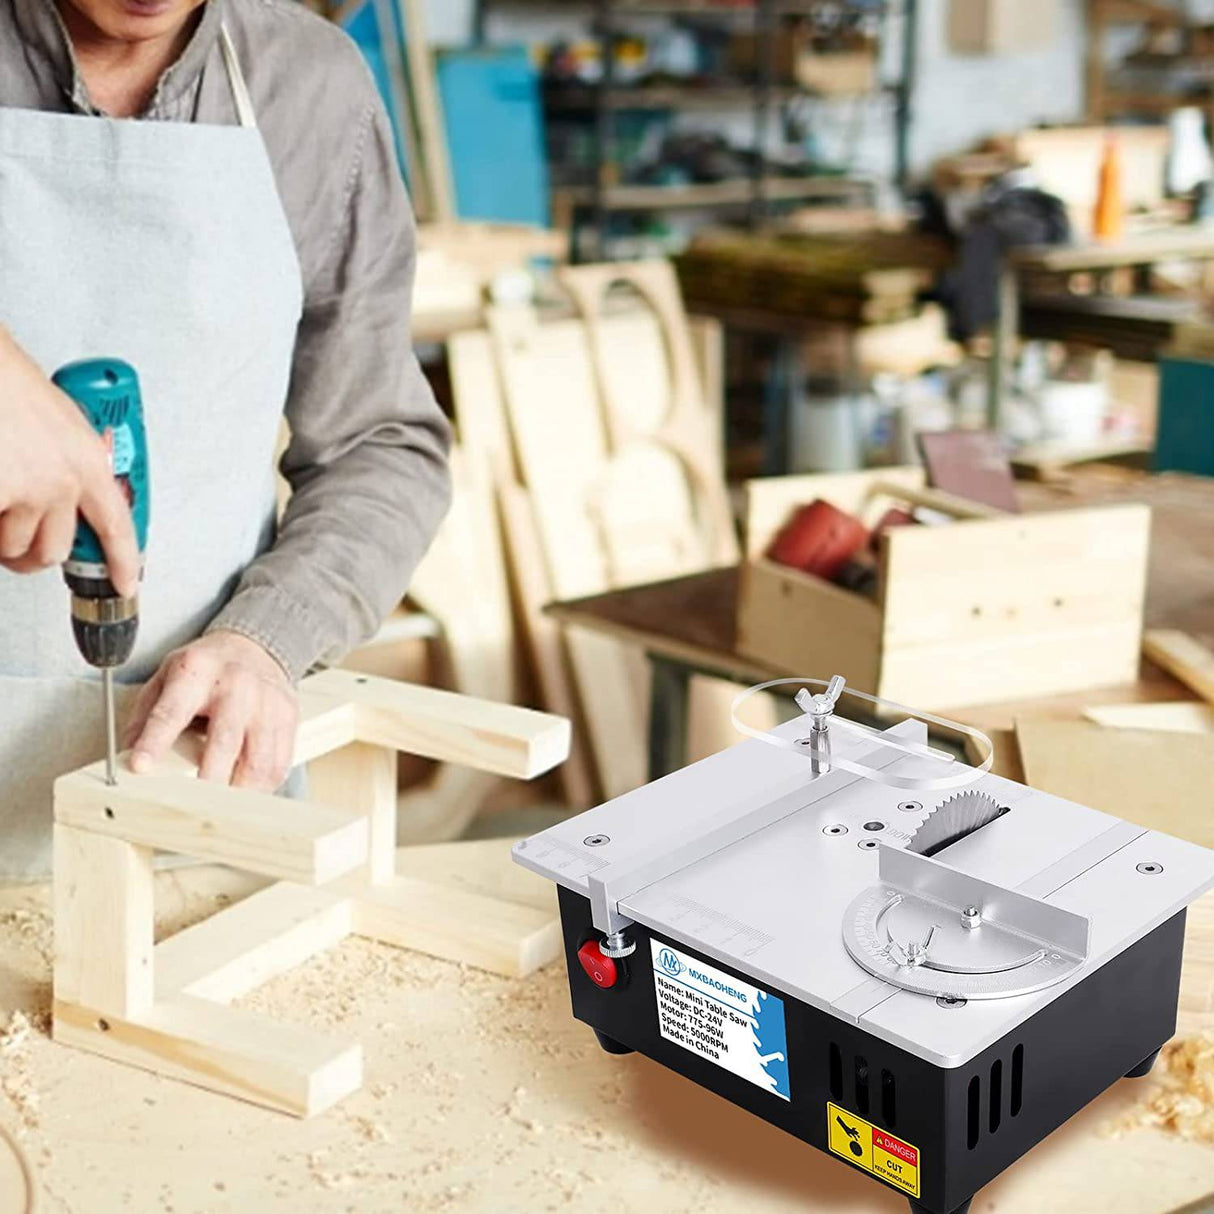 Sierra de mesa eléctrica, máquina de corte pequeña, corte de ángulo de 0 a  90, sierra de mesa portátil para carpintería para manualidades de modelos